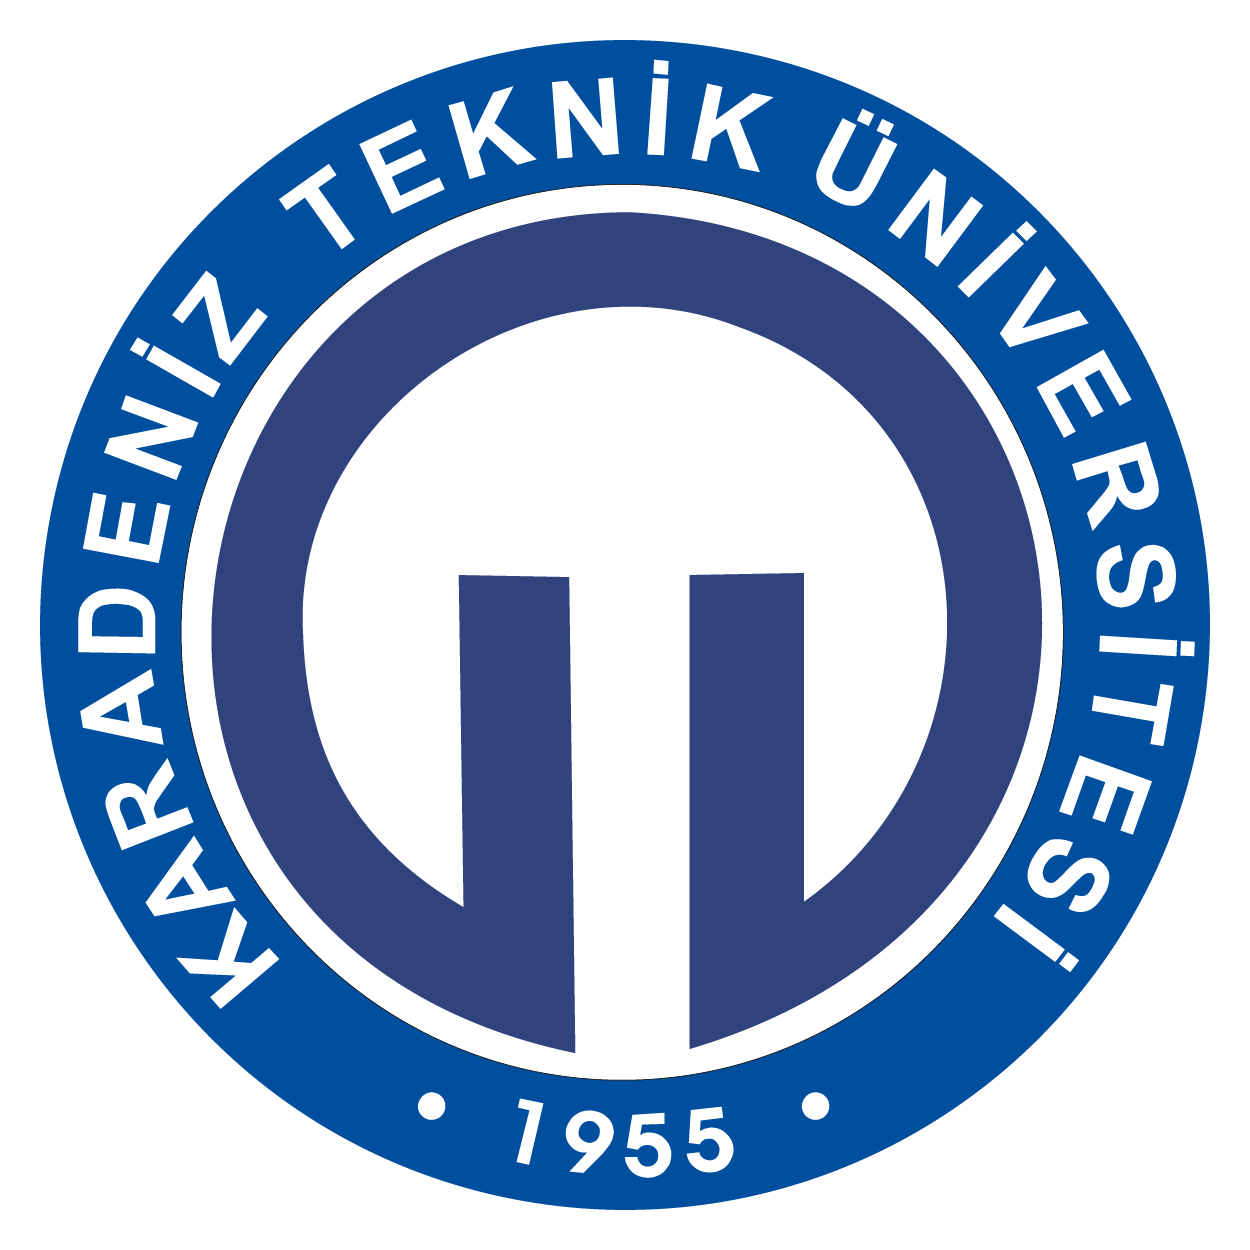 Karadeniz Teknik Üniversitesi Logo   KTÜ (Trabzon) png